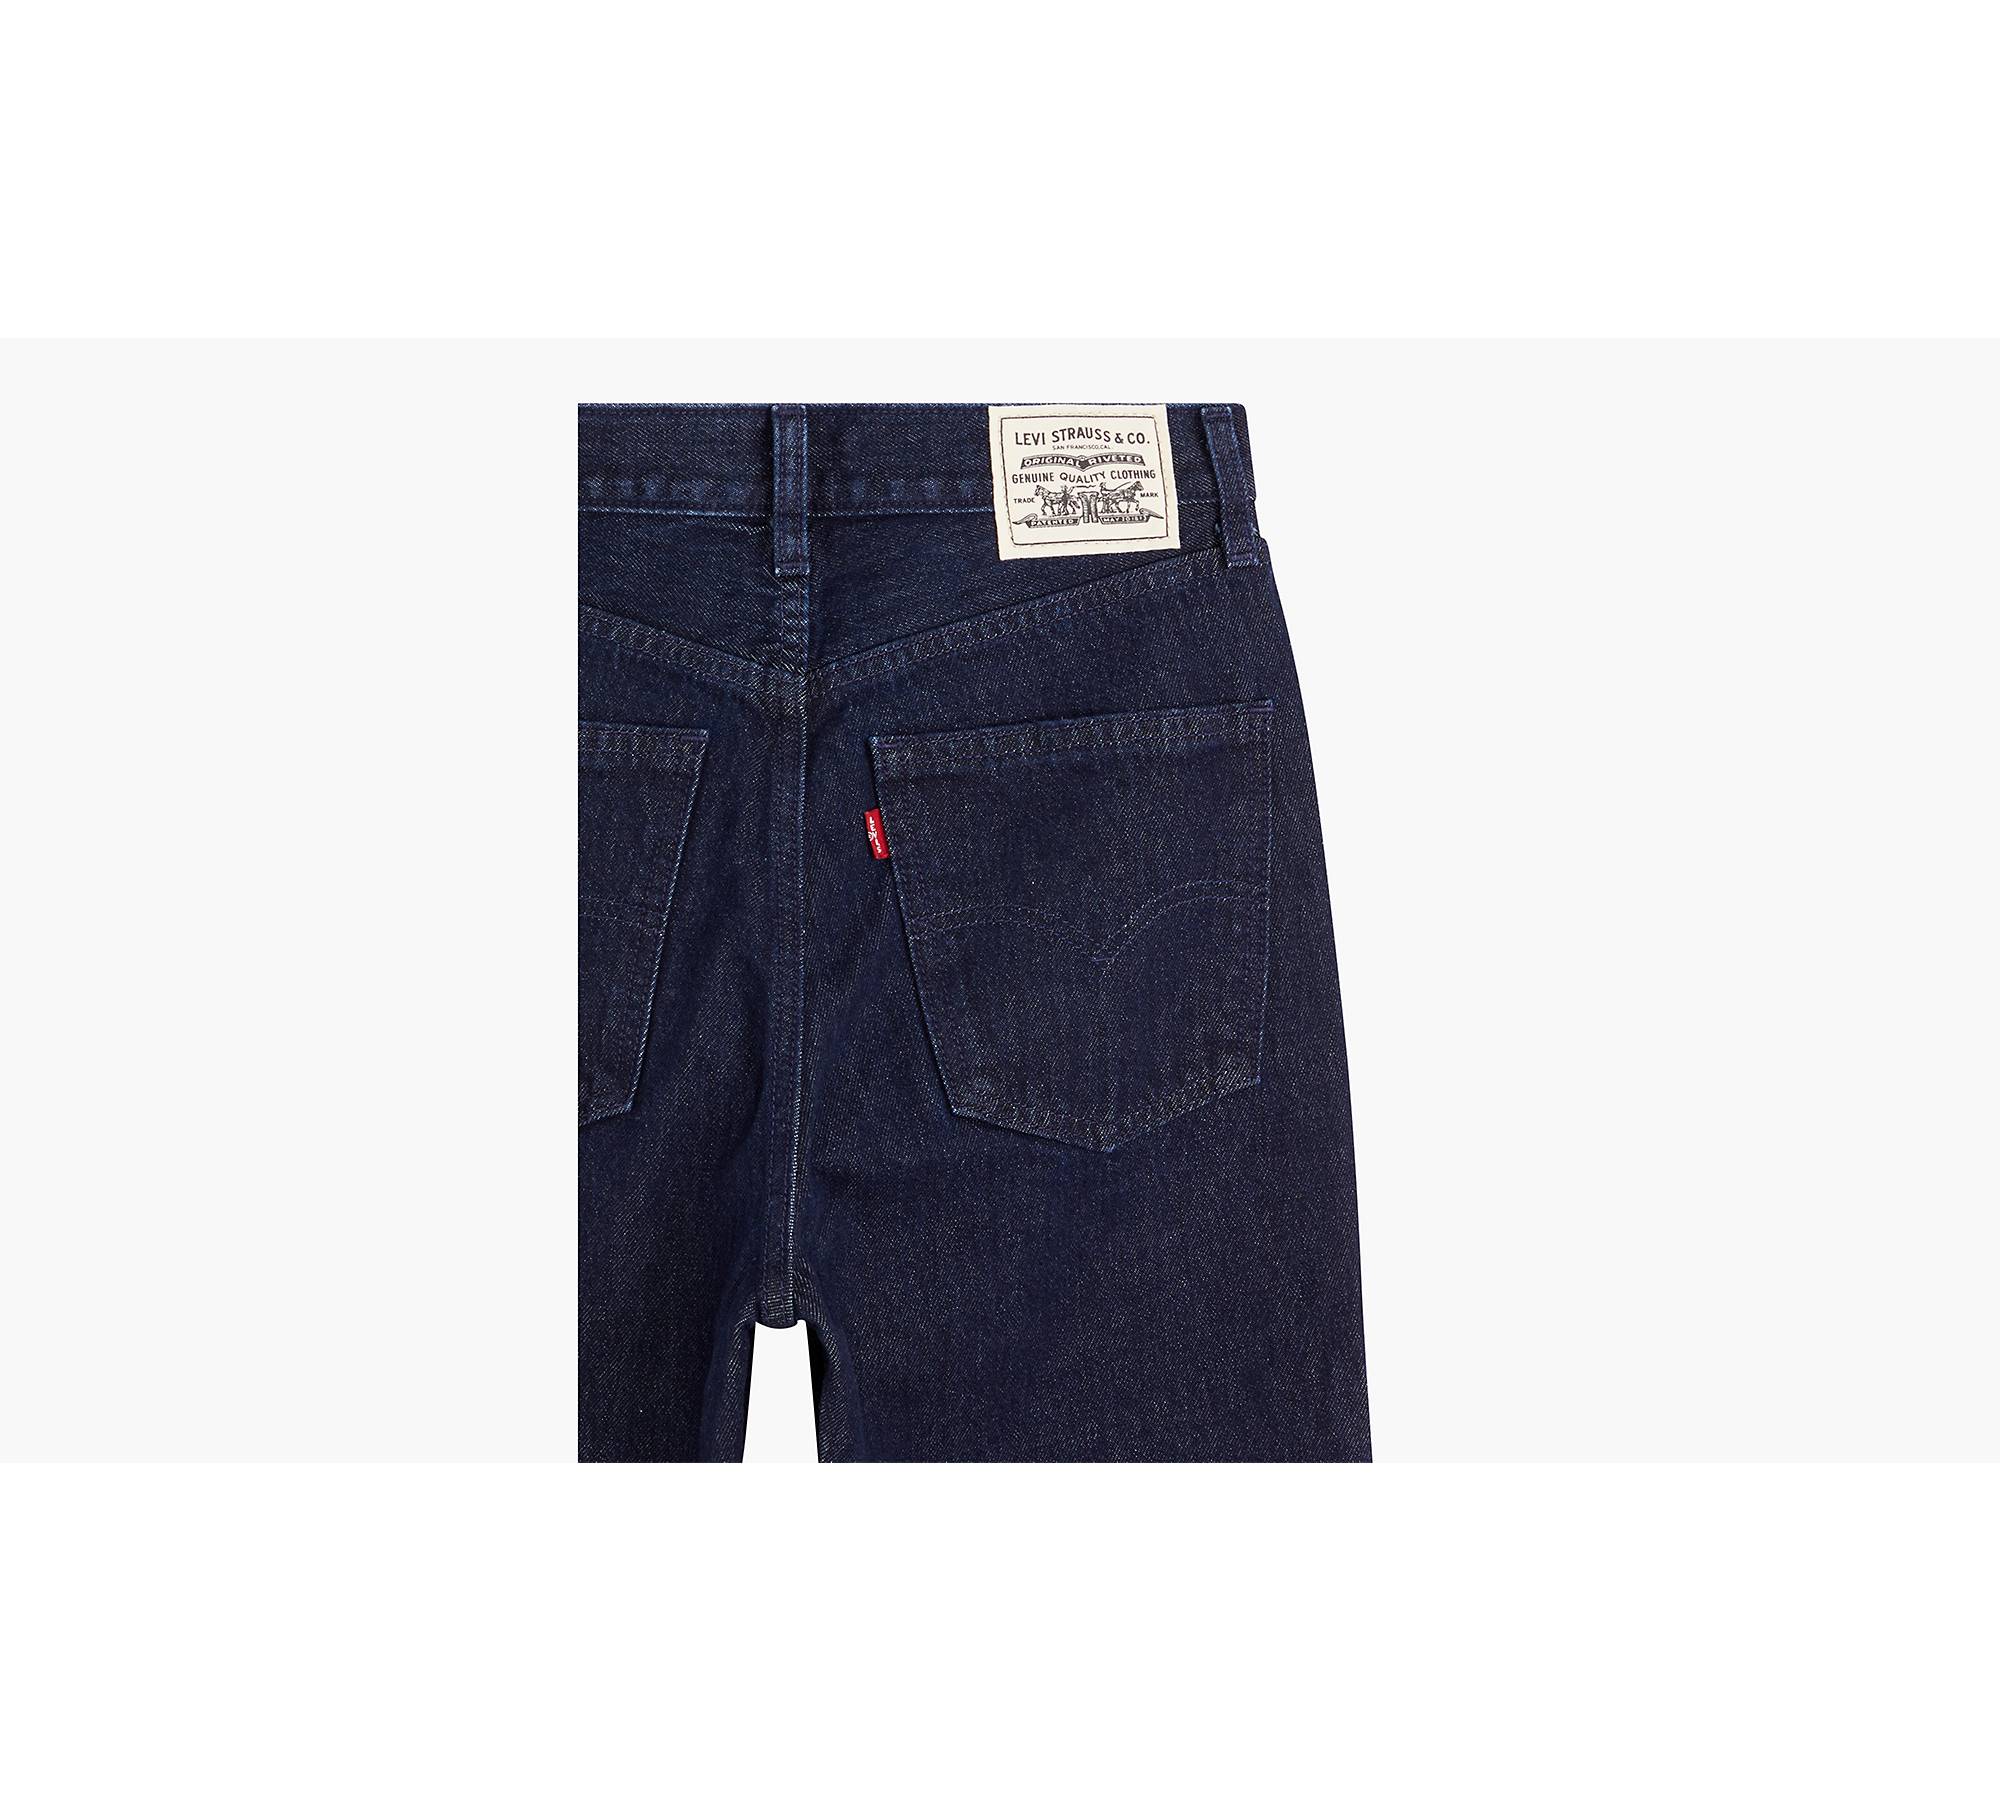 Levi's® Wellthread® '70s High Straight Women's Jeans - Dark Wash 